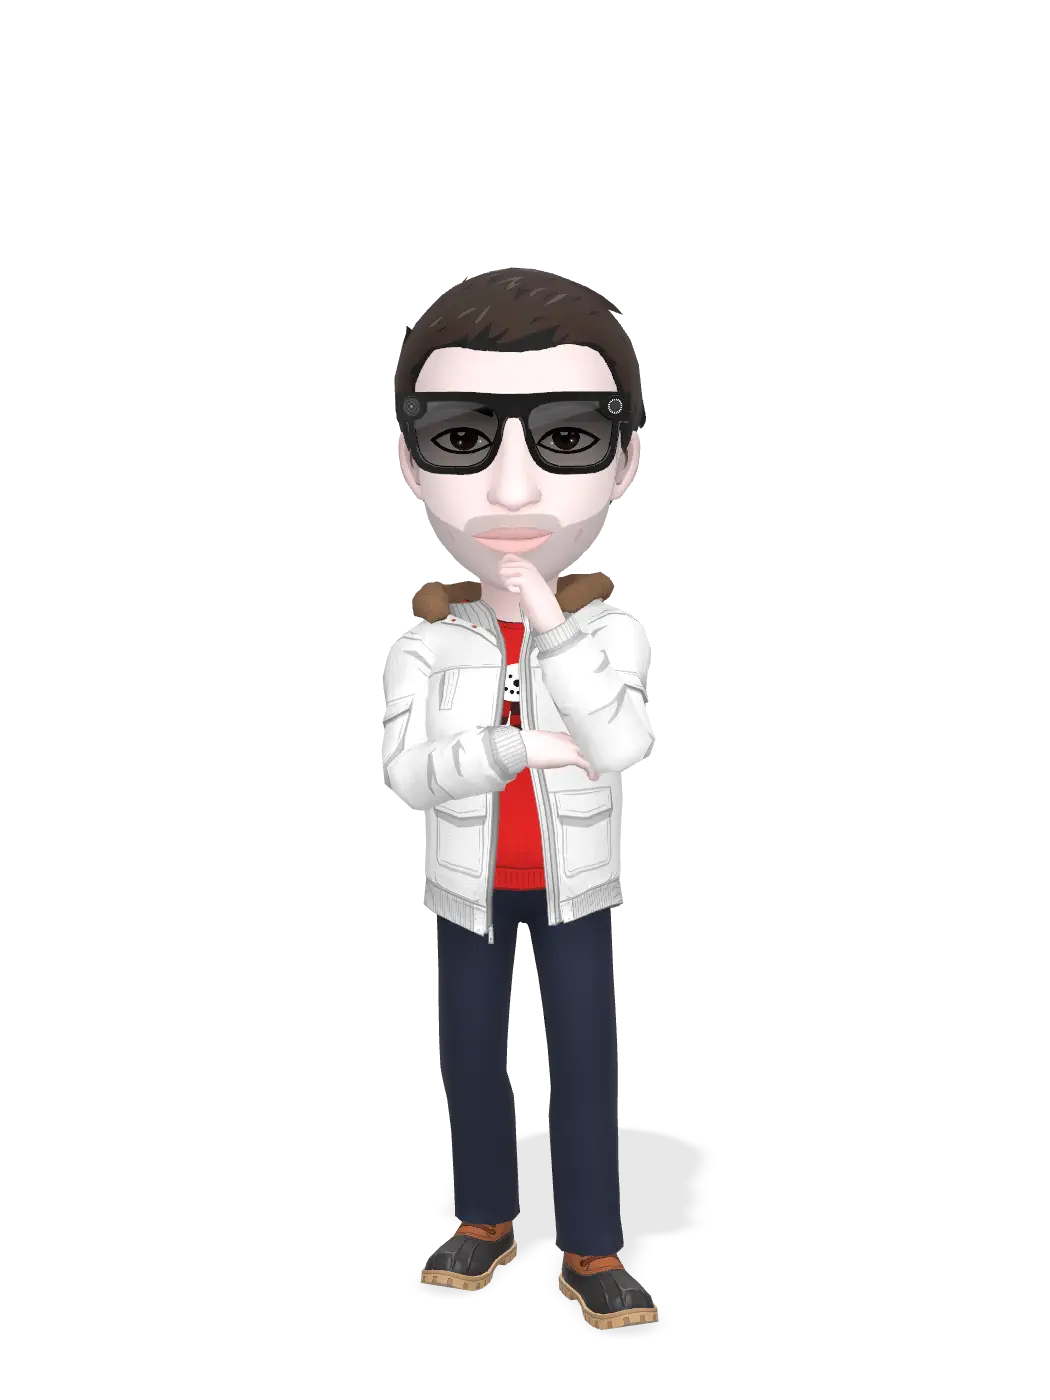 3D Bitmoji for jairoxxx avatar